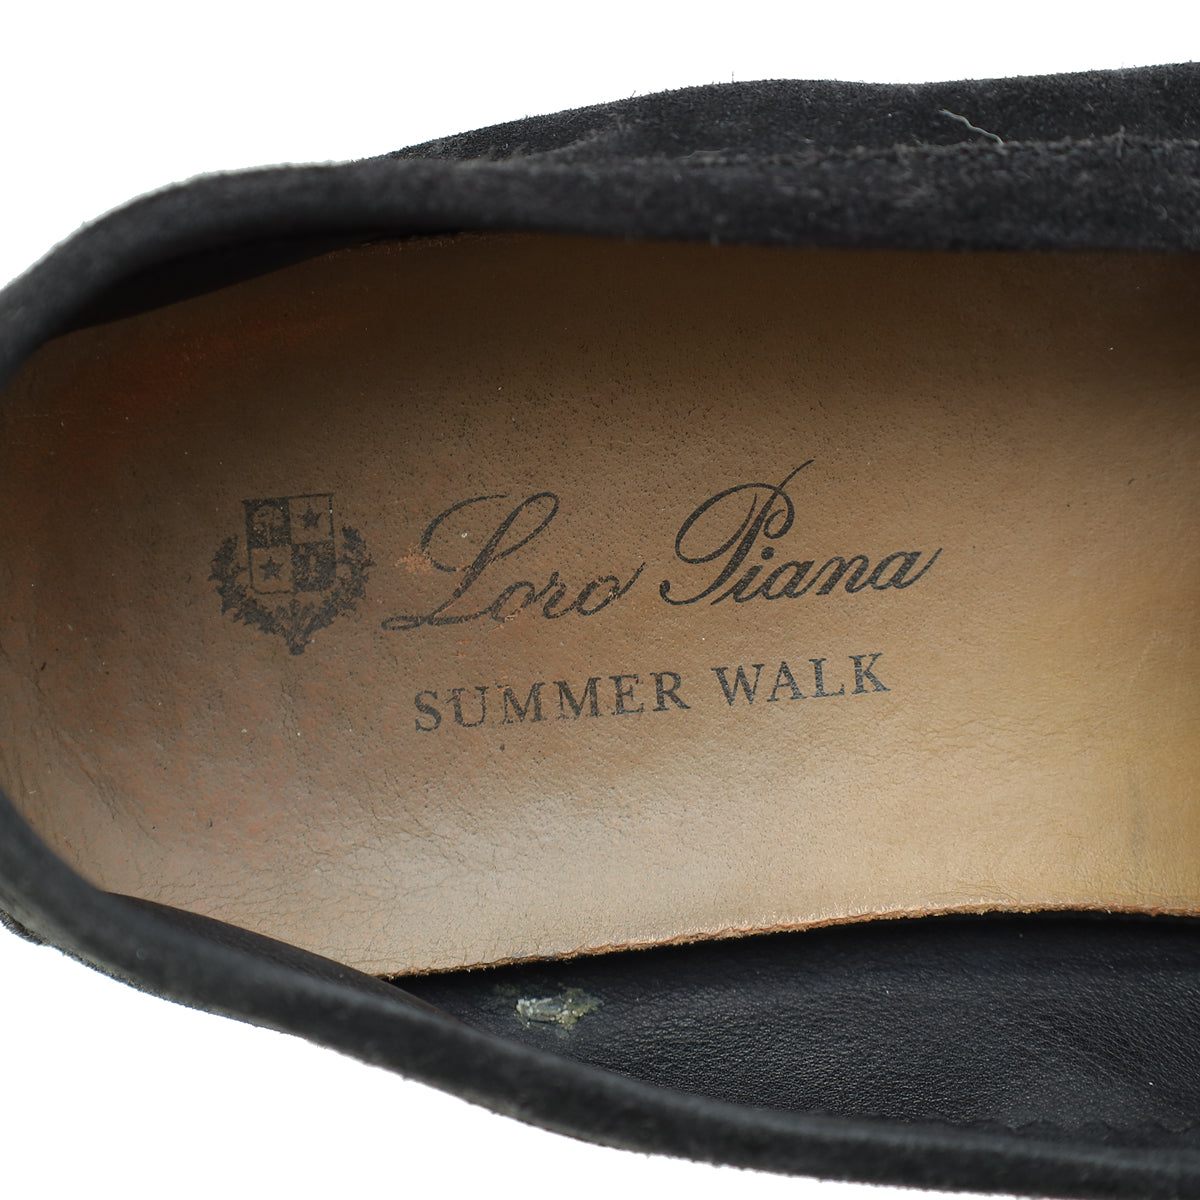 Loro Piana Black Summer Charms Walk Loafers 38.5